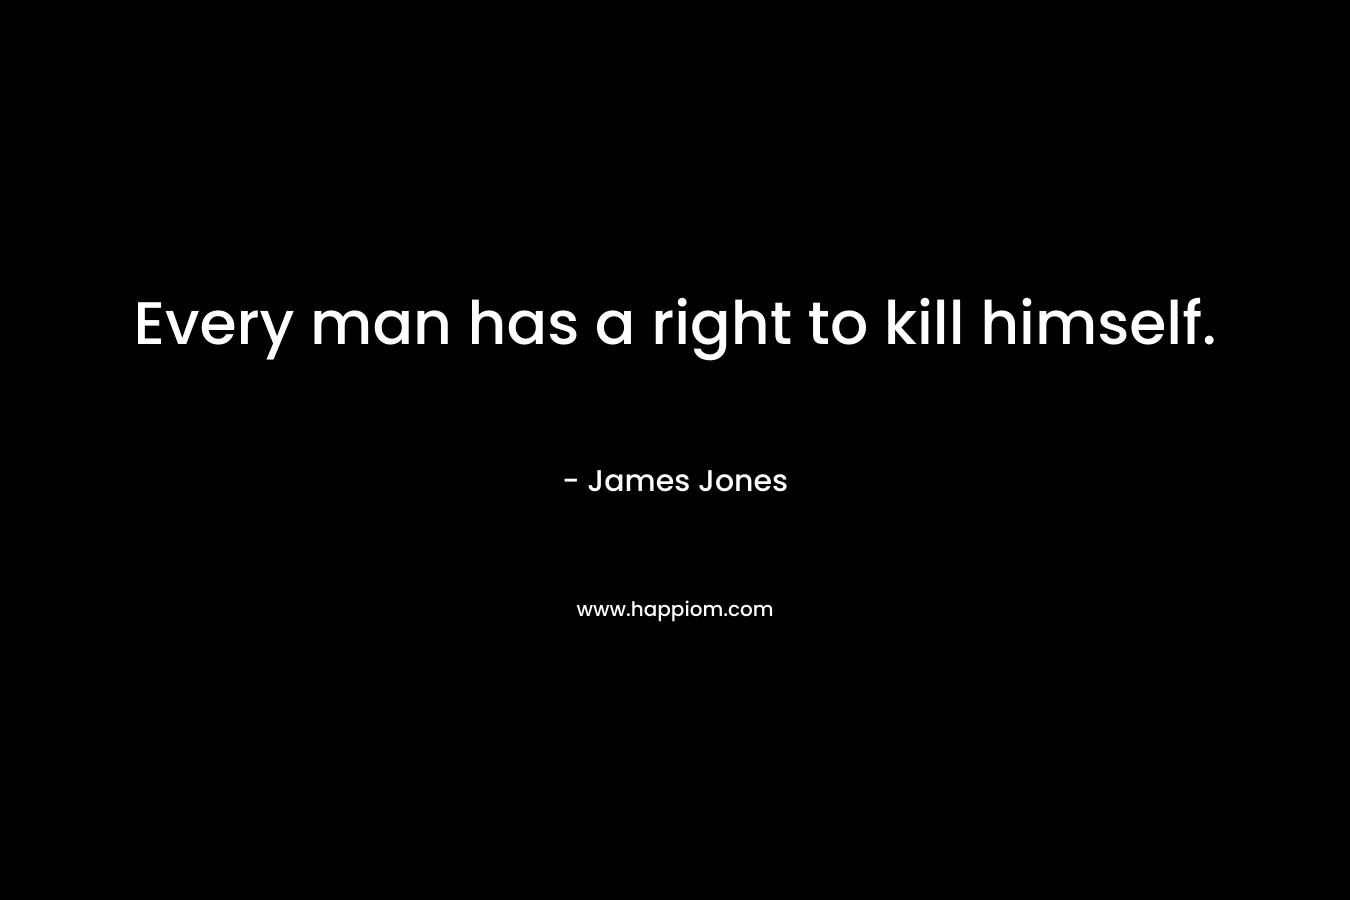 Every man has a right to kill himself.